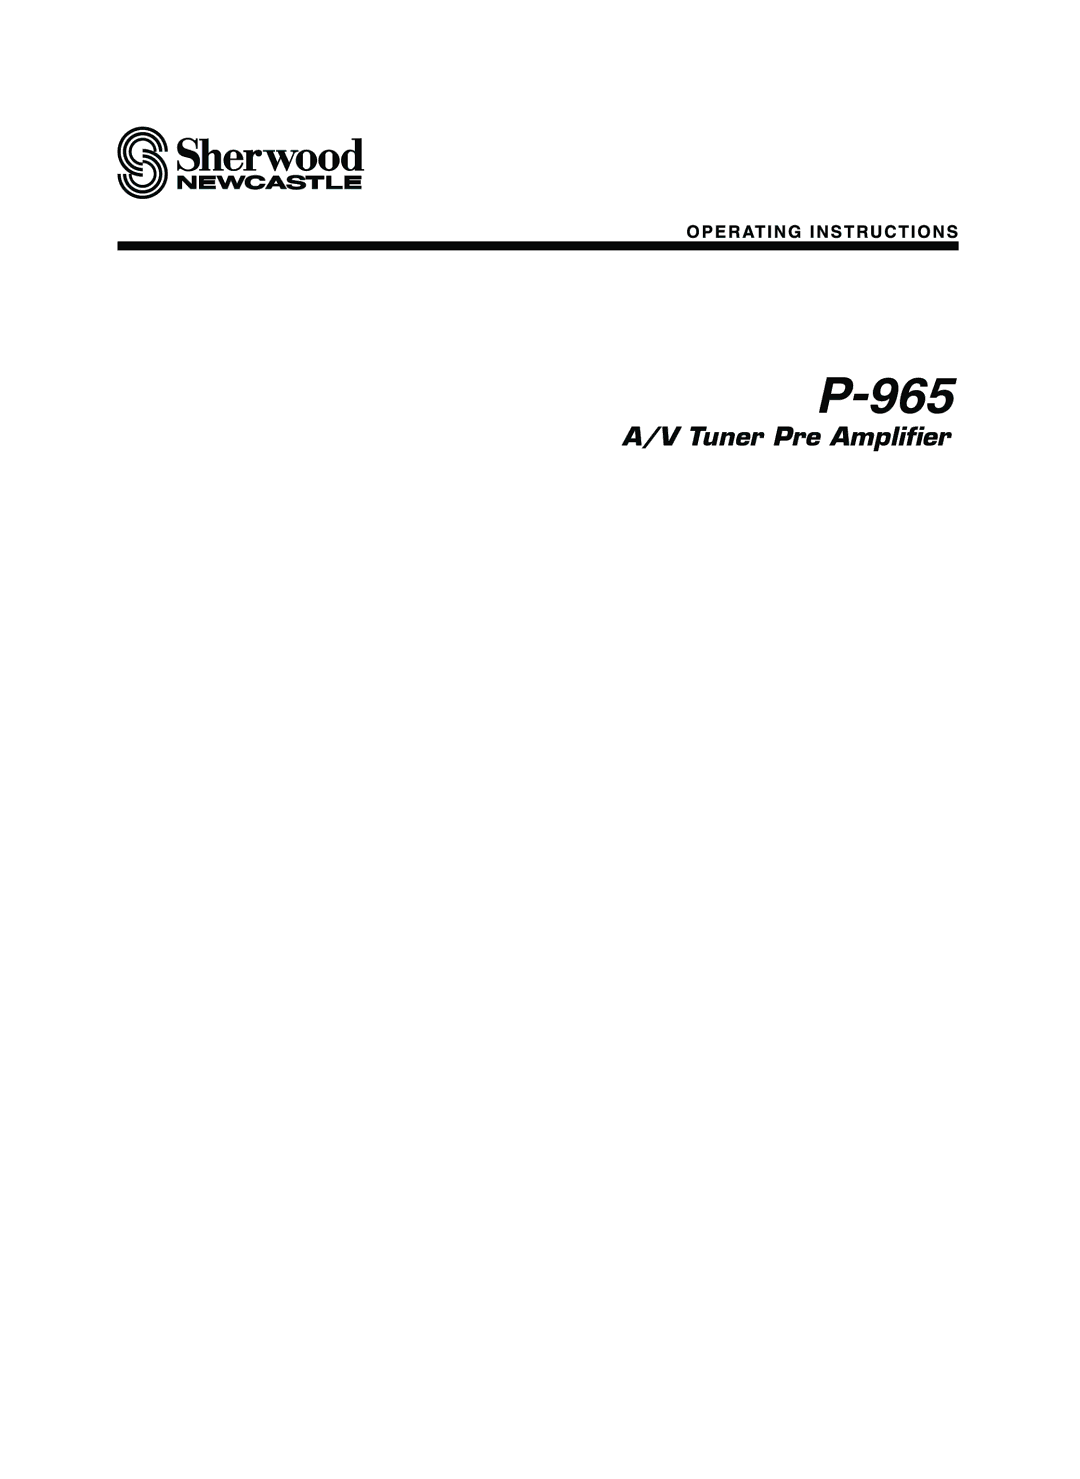 Sherwood P-965 manual 